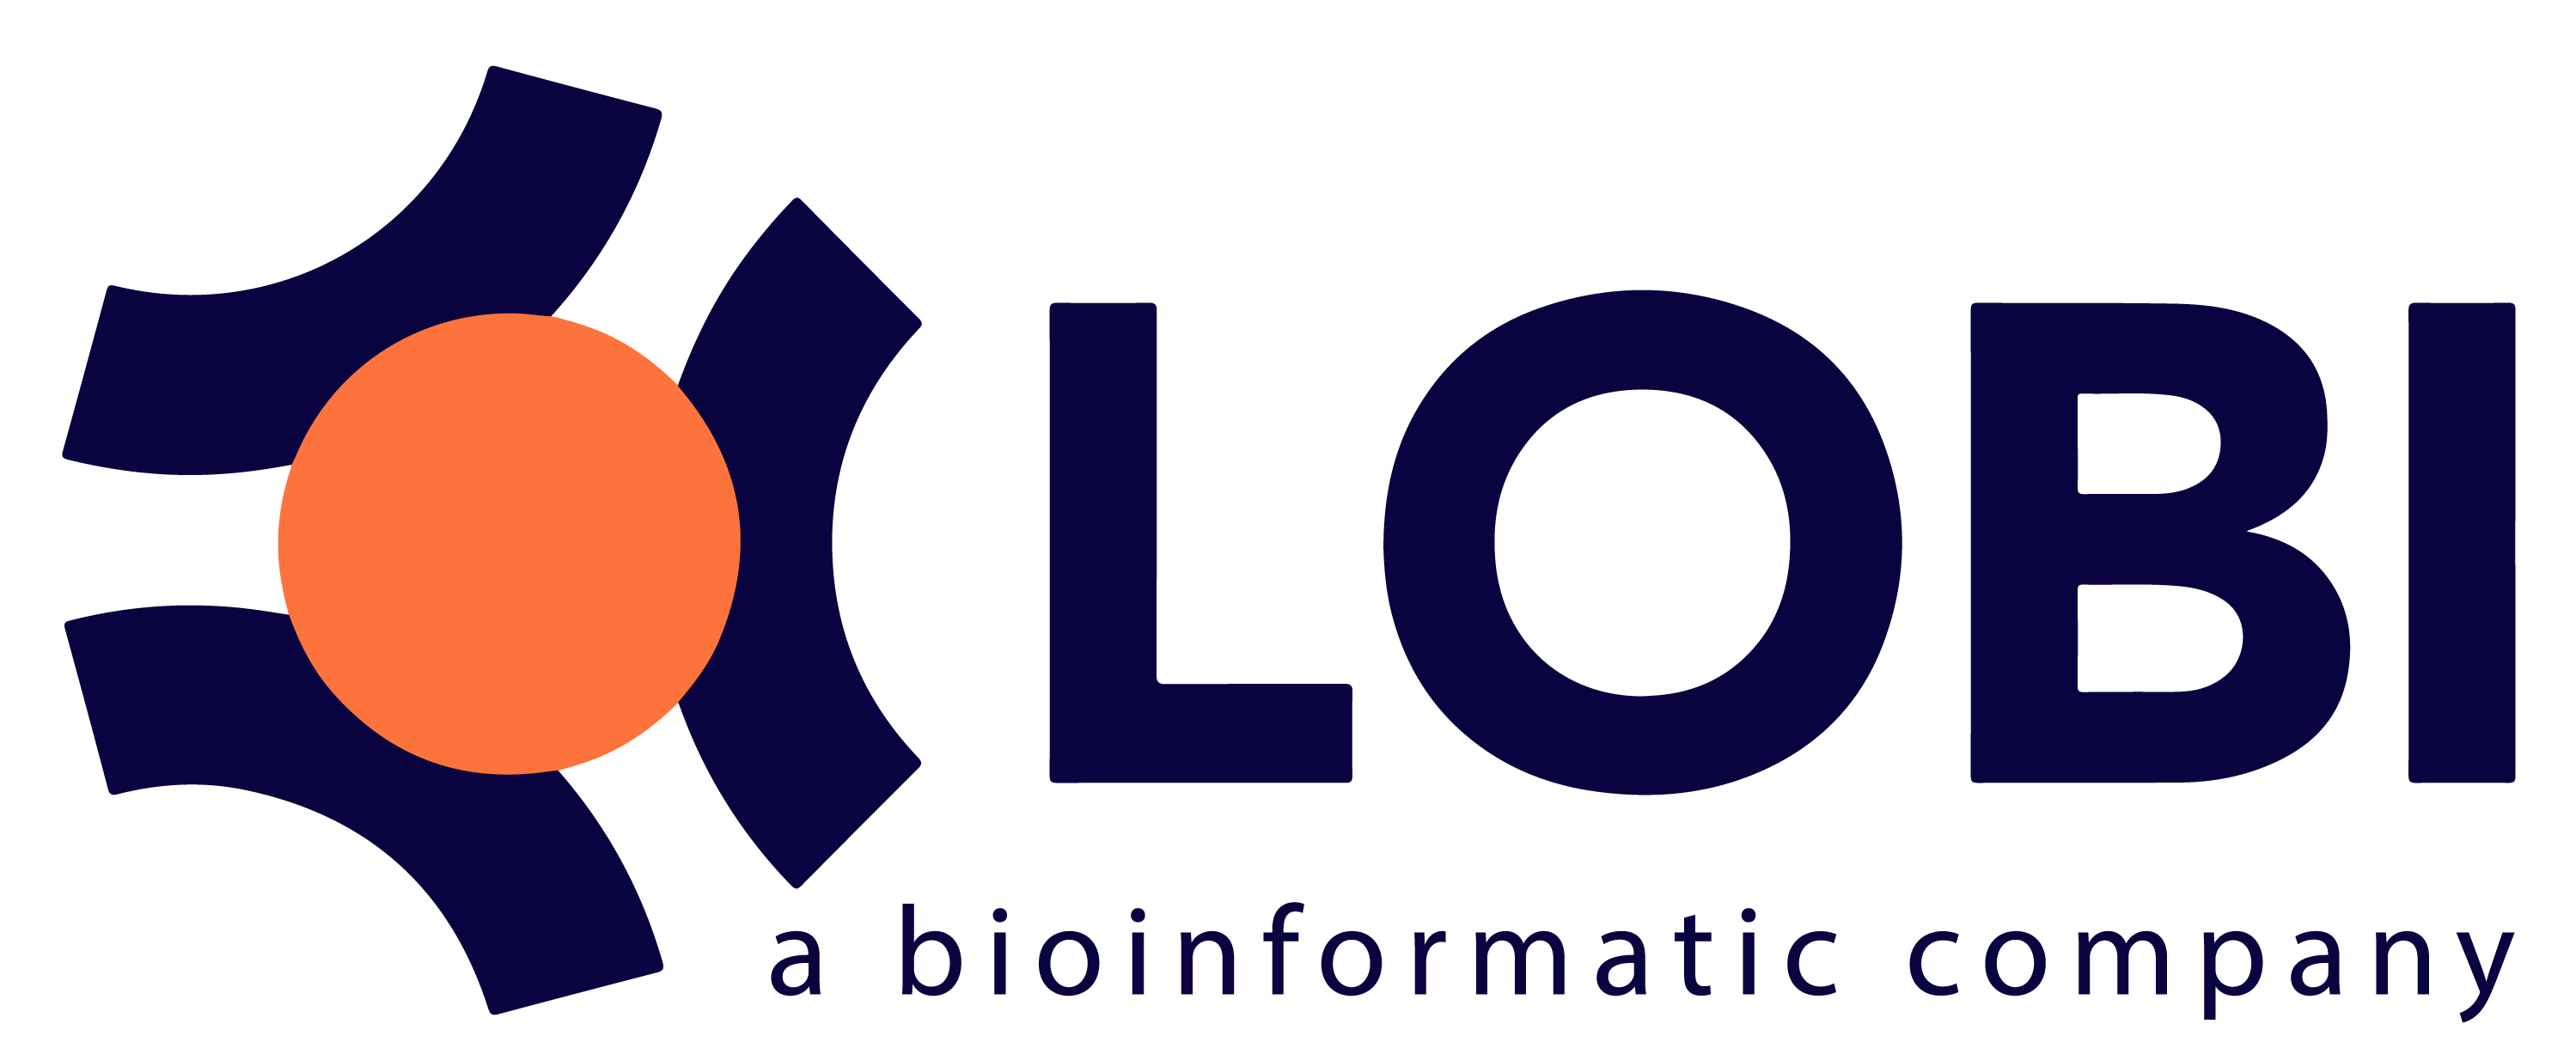 LOBI – a bioinformatic company